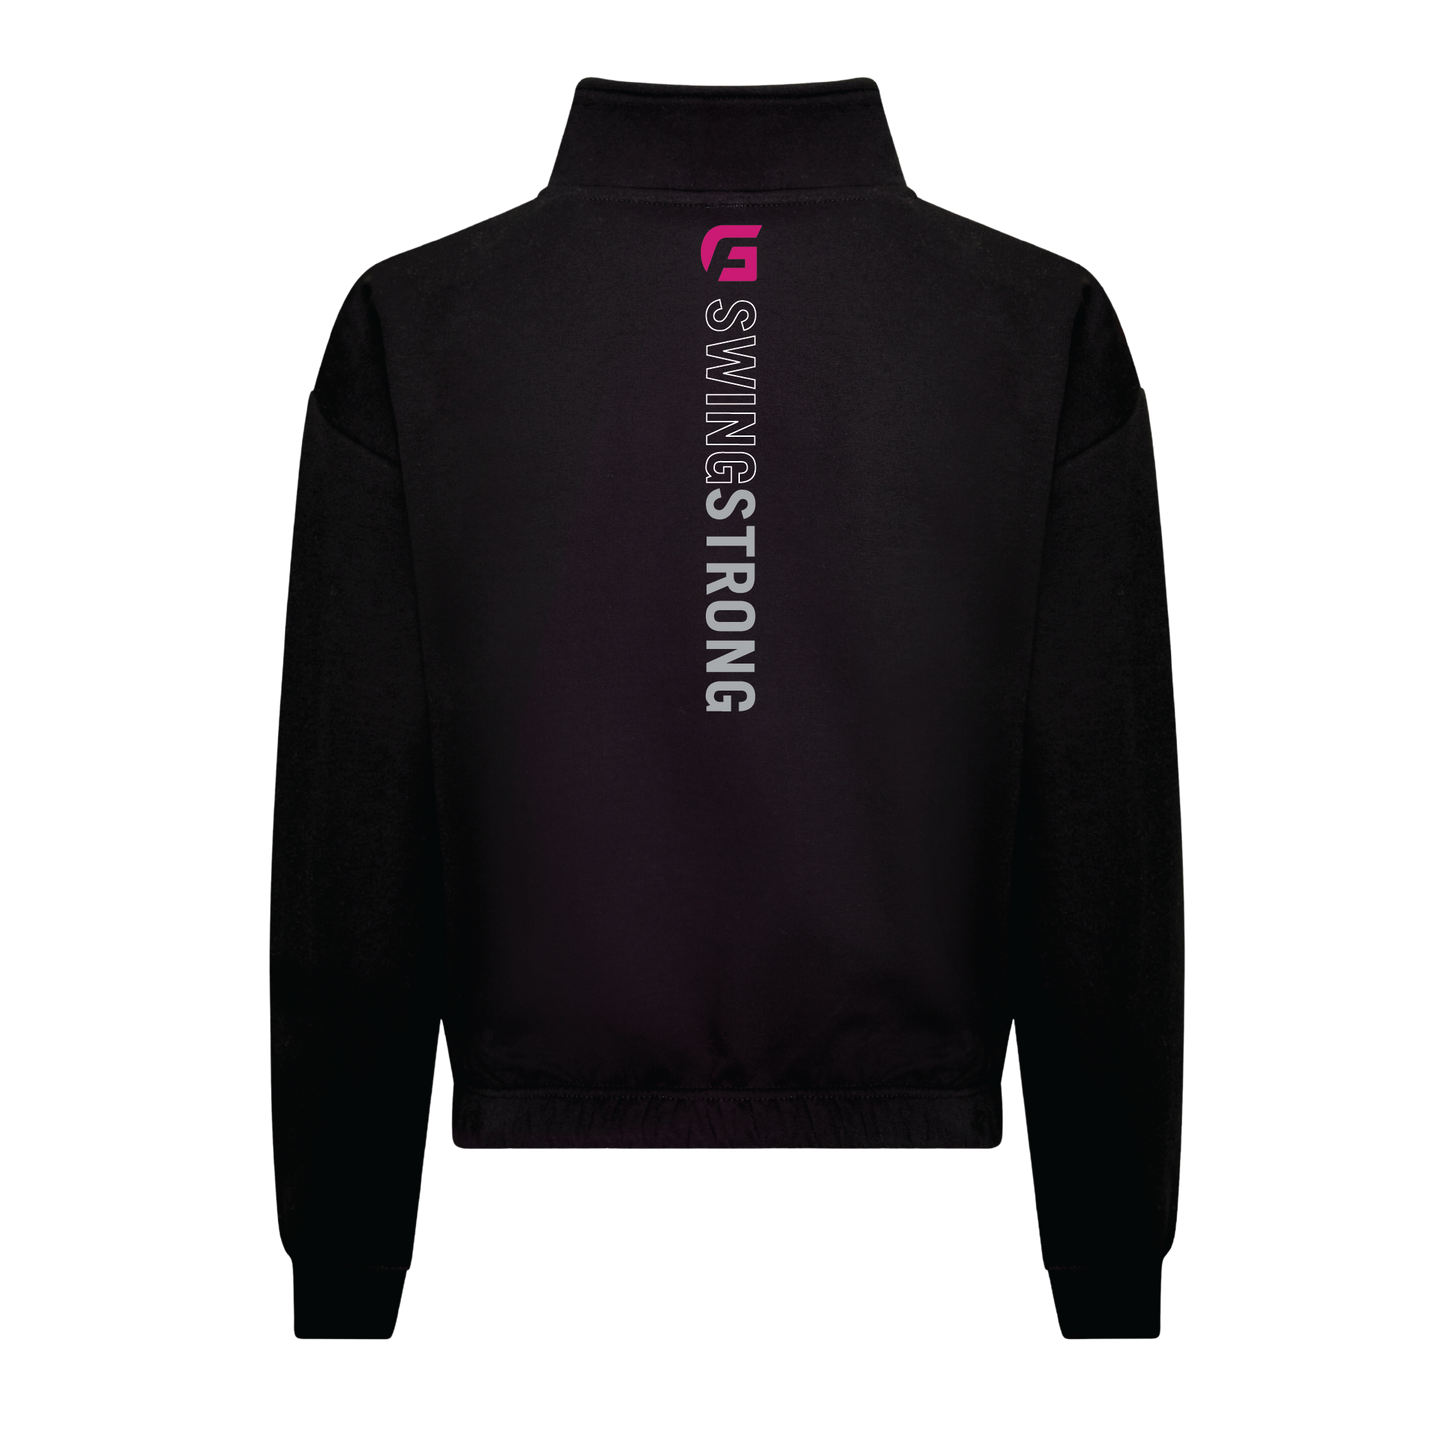 Focusgolf Swing Strong Women's Carbon Black Qtr Zip Sweatshirt